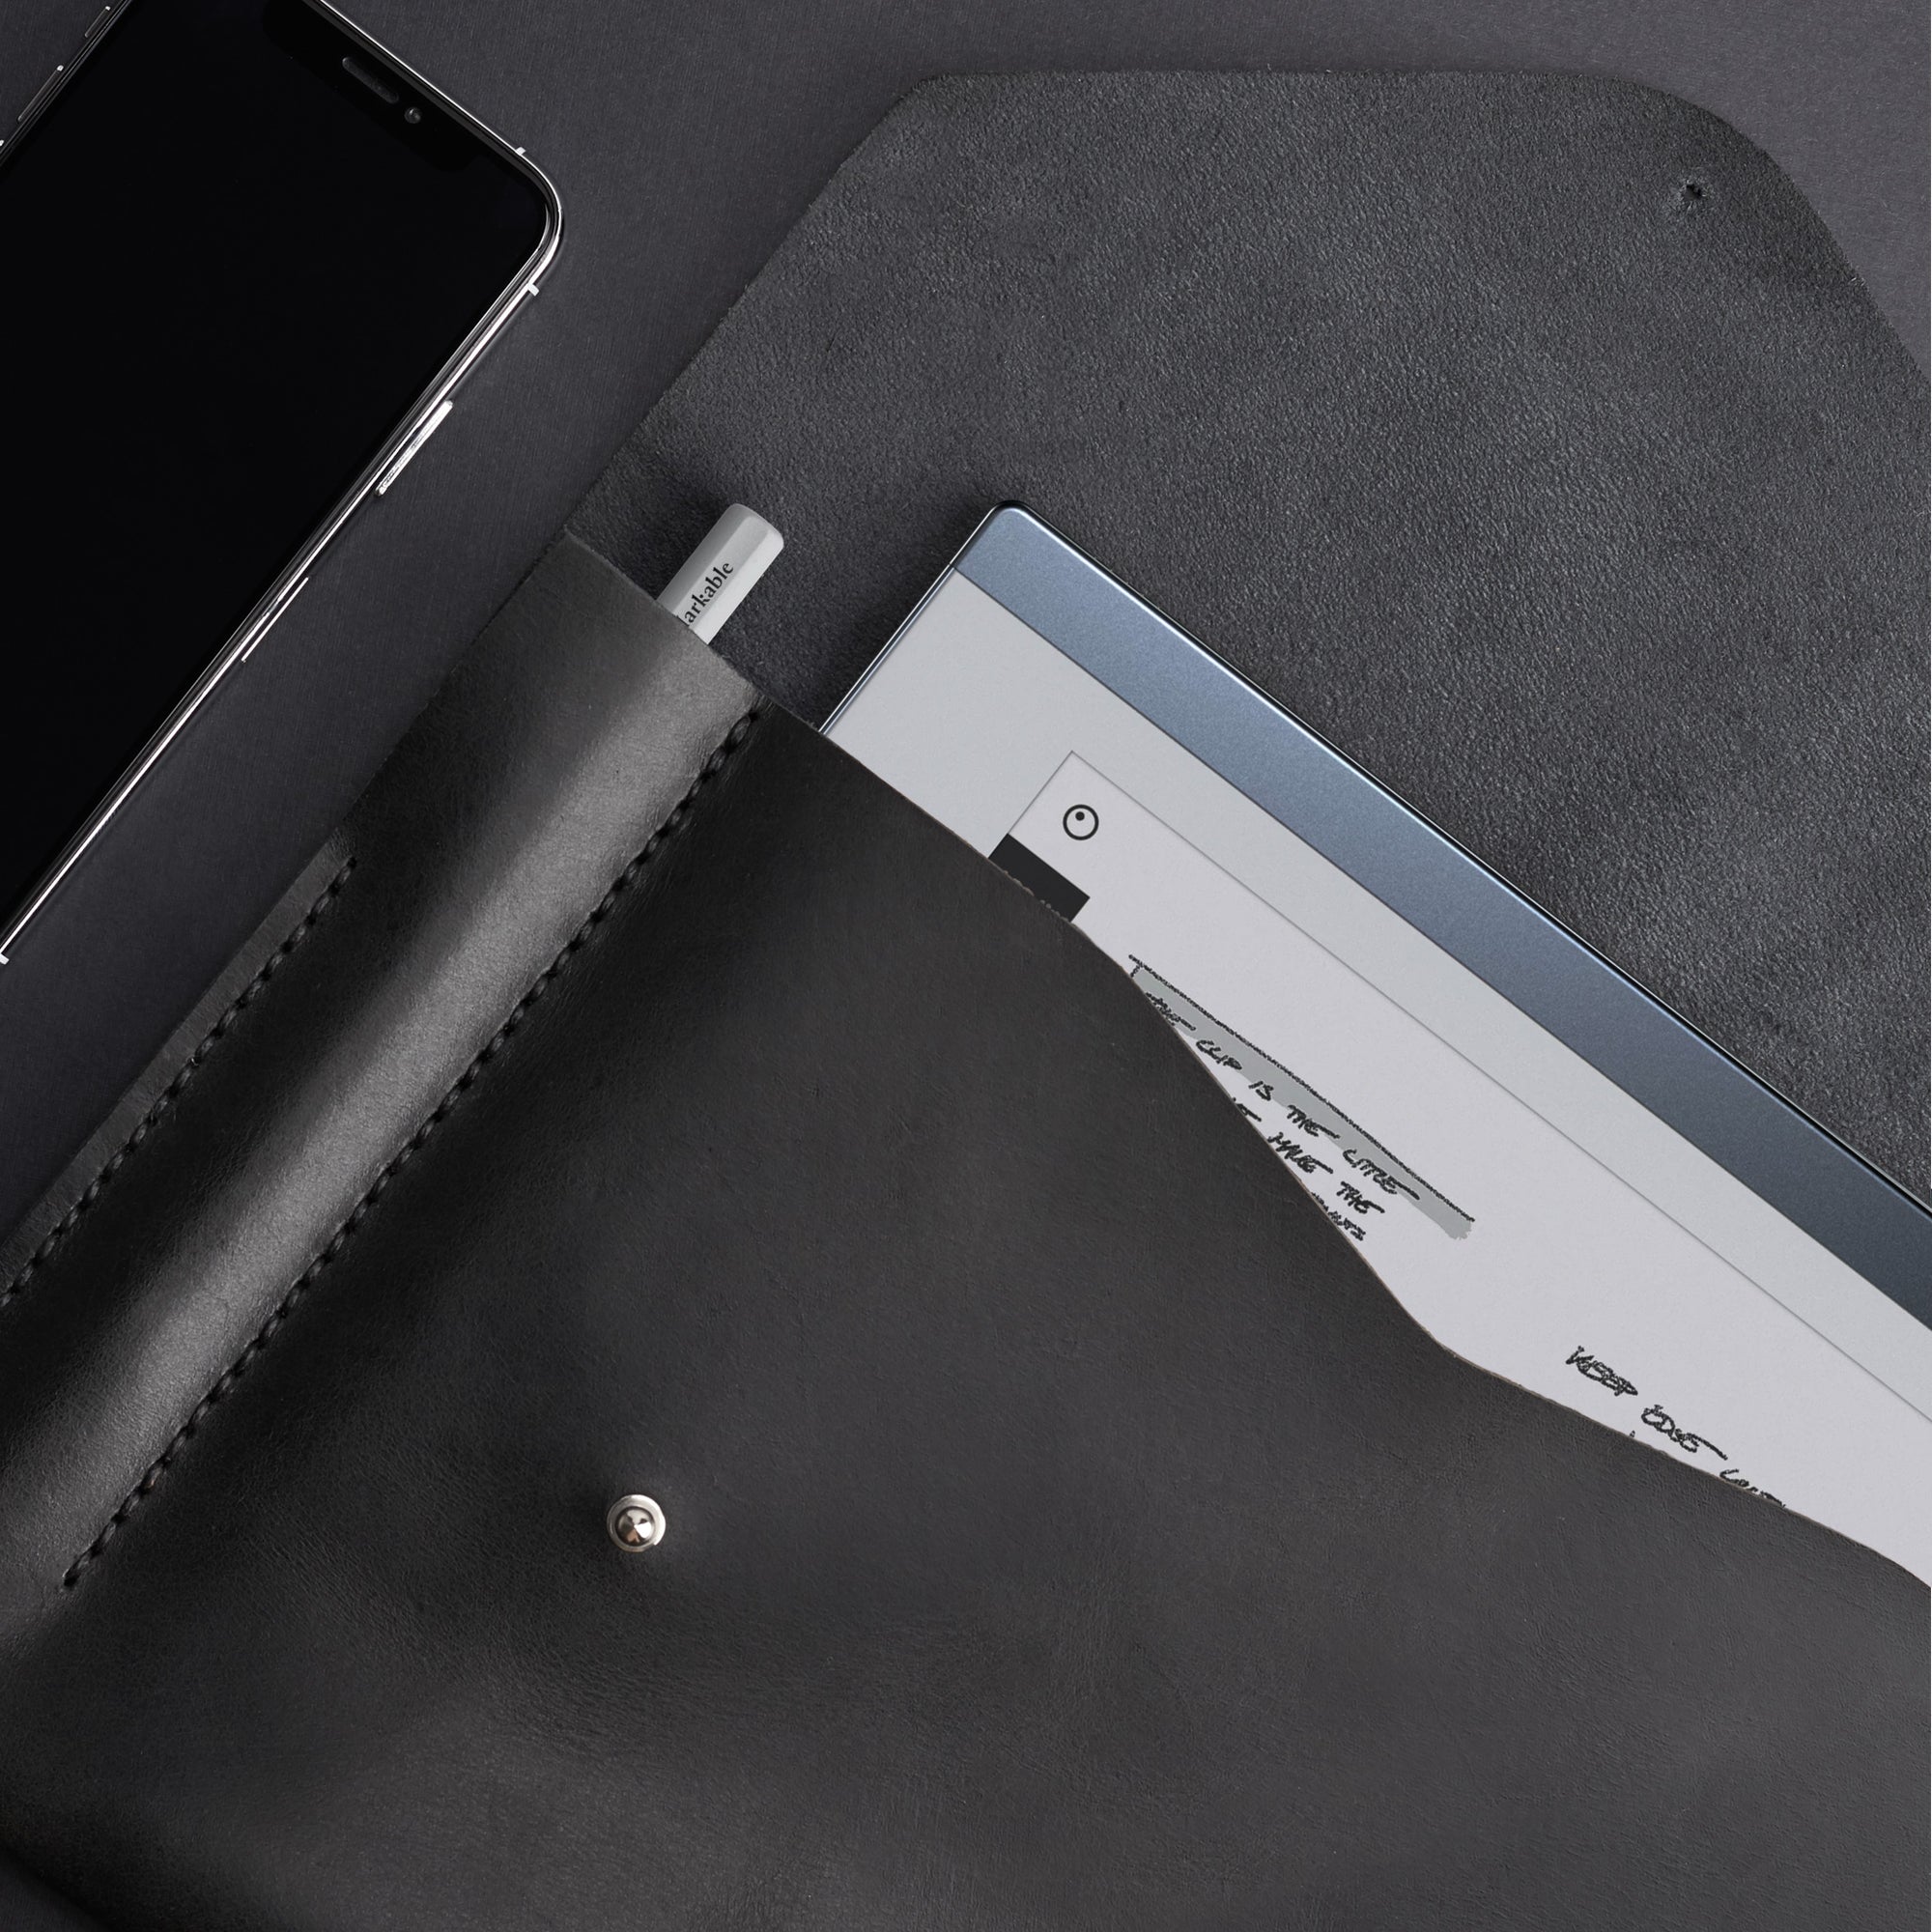 Marker holder. Black Leather reMarkable 1 Cover Case Sleeve With Marker Holder by Capra Leather